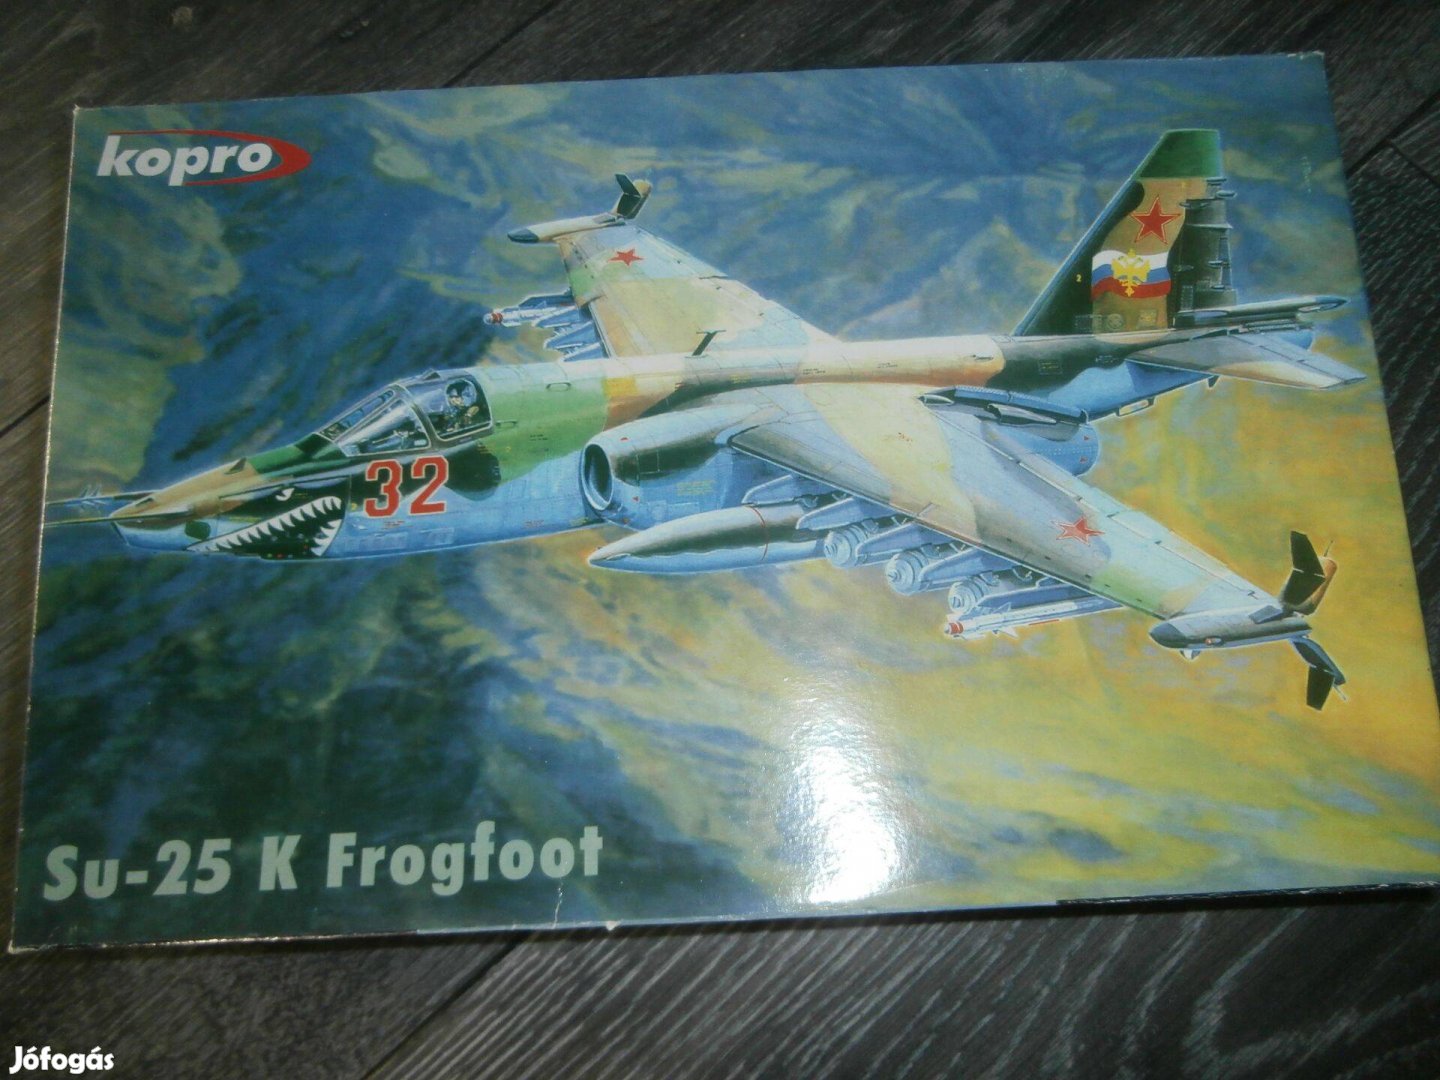 Suchoj SU-25 K Frogfoot 1:72 Corpo makett No 3121